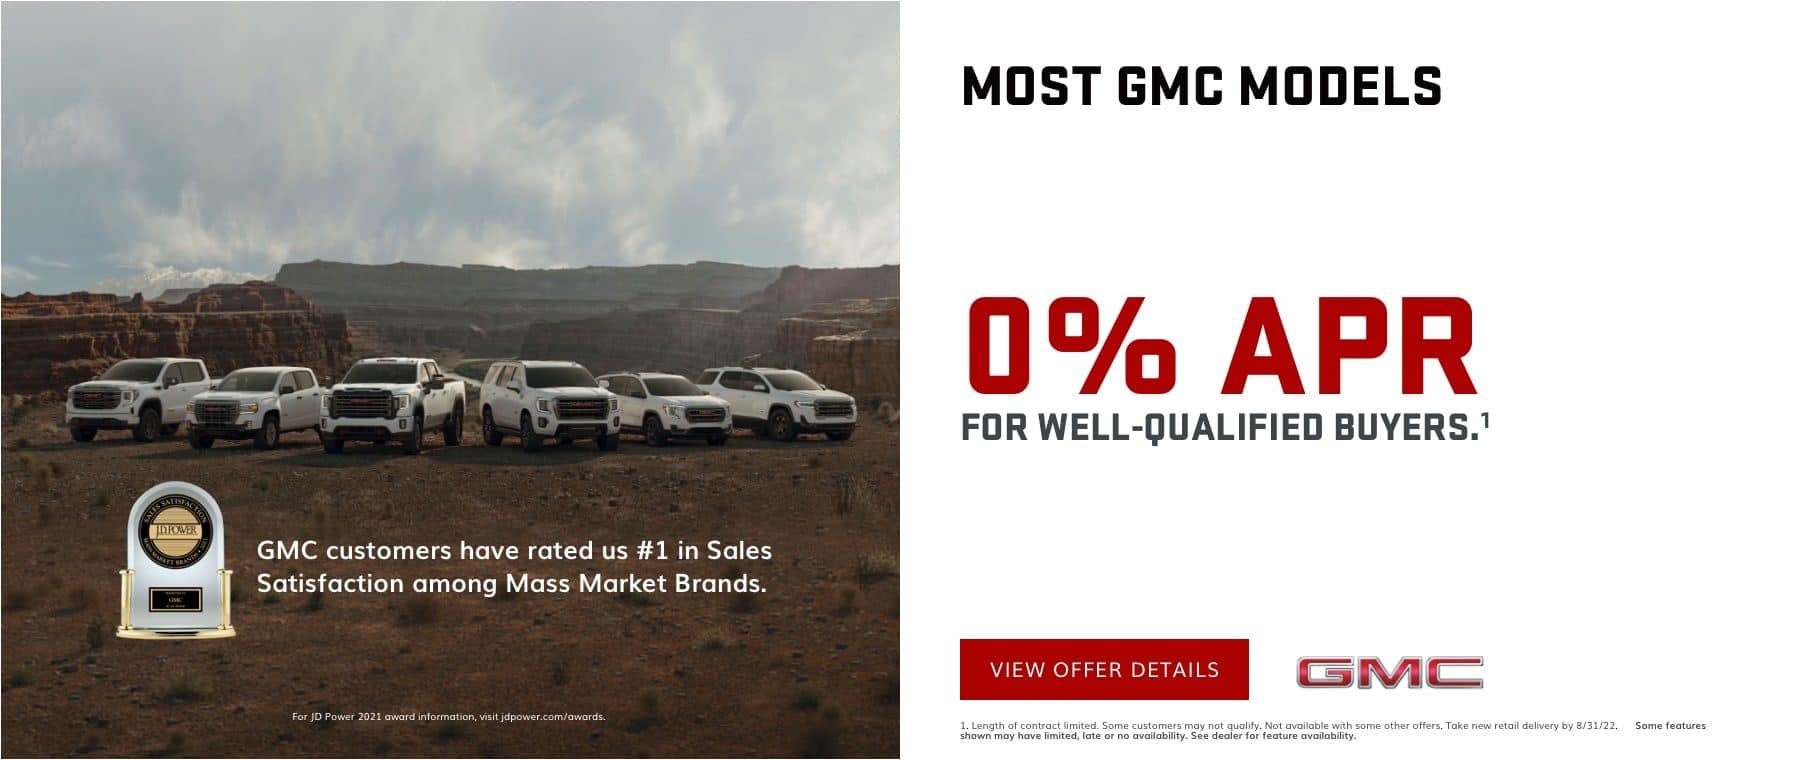 GMC Sierra vs. Toyota Tacoma – Comparing Top Selling Light-Duty Pickup Trucks